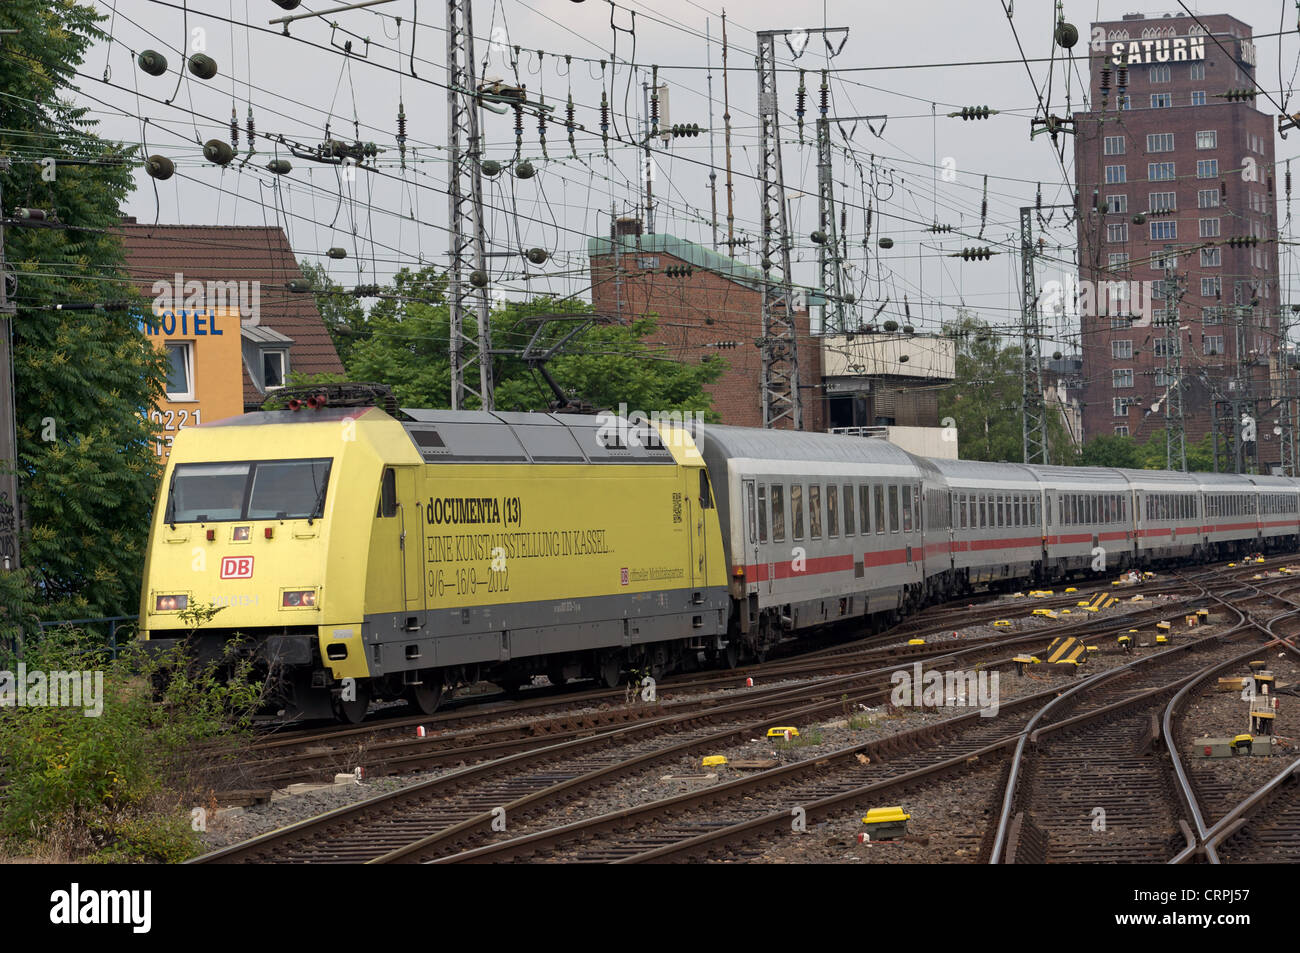 German Railways locomotive advertising documenta (13) exhibition Stock Photo